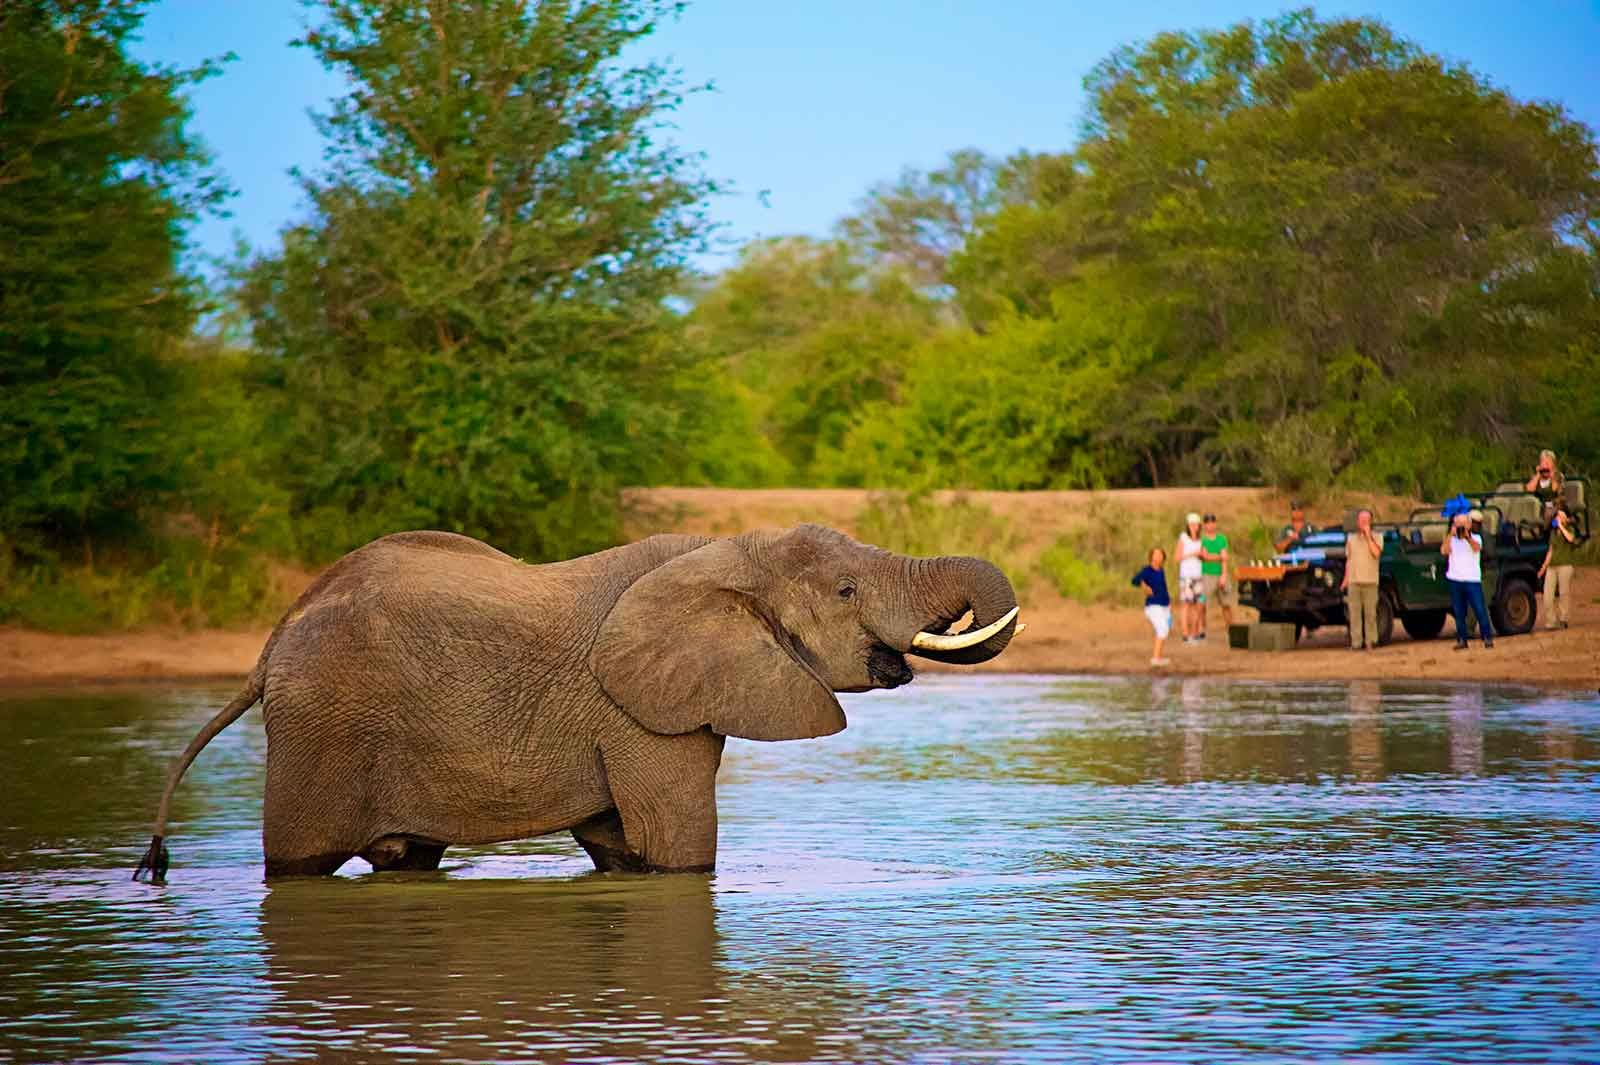 An elephant in Kruger National park while writing the comparison article on Kruger vs Hwange national park